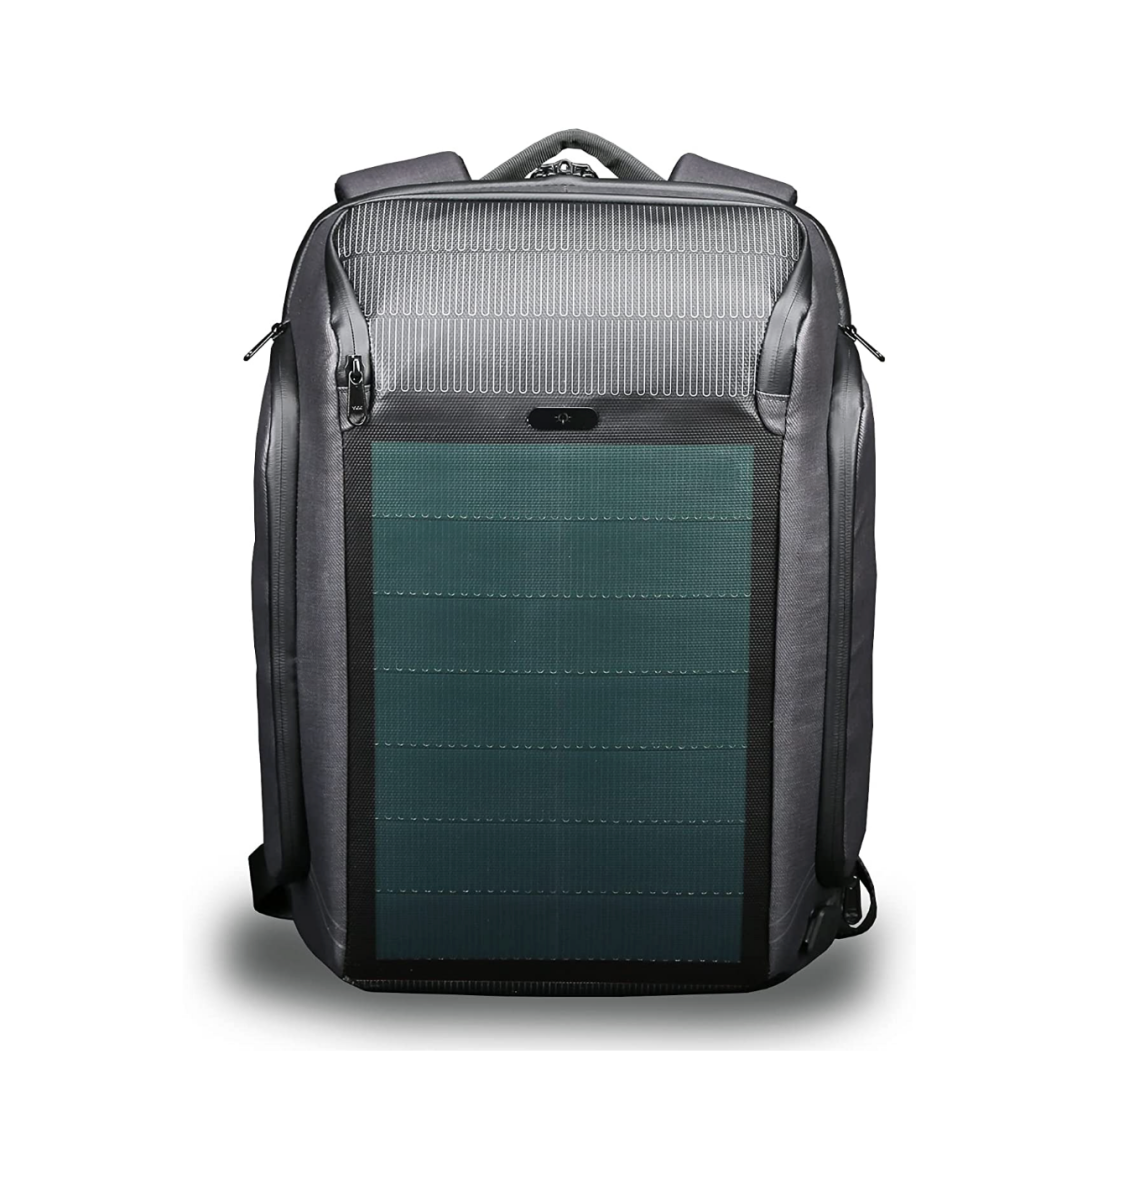 A Kingsons Beam Solar Backpack